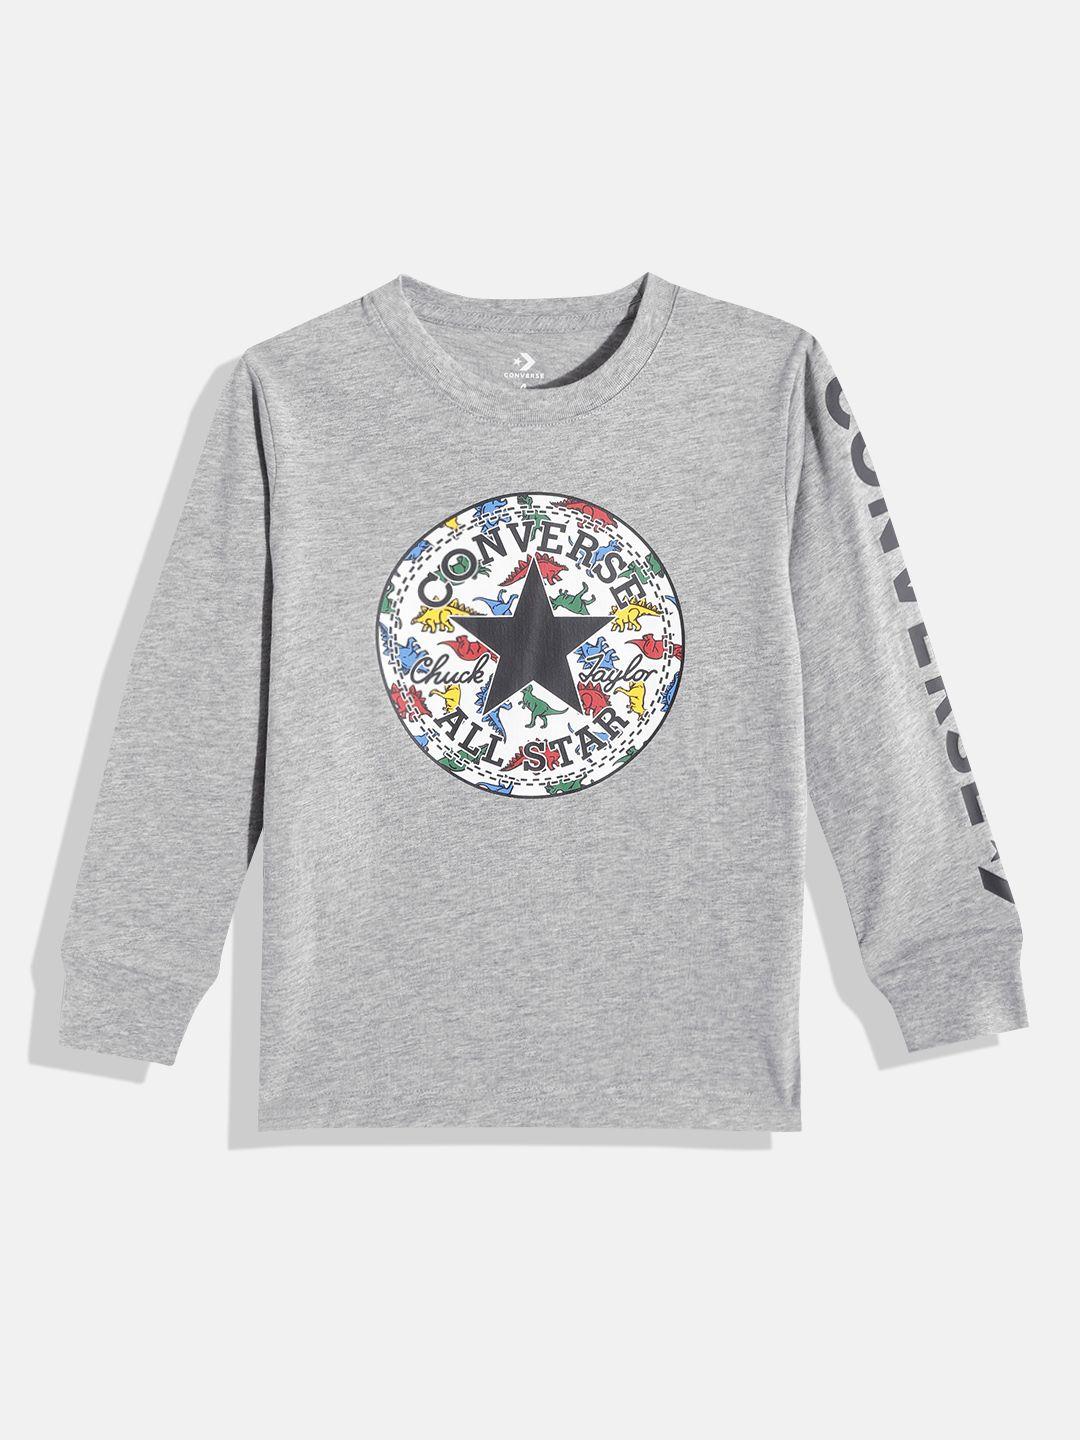 converse boys grey melange & white brand logo printed t-shirt